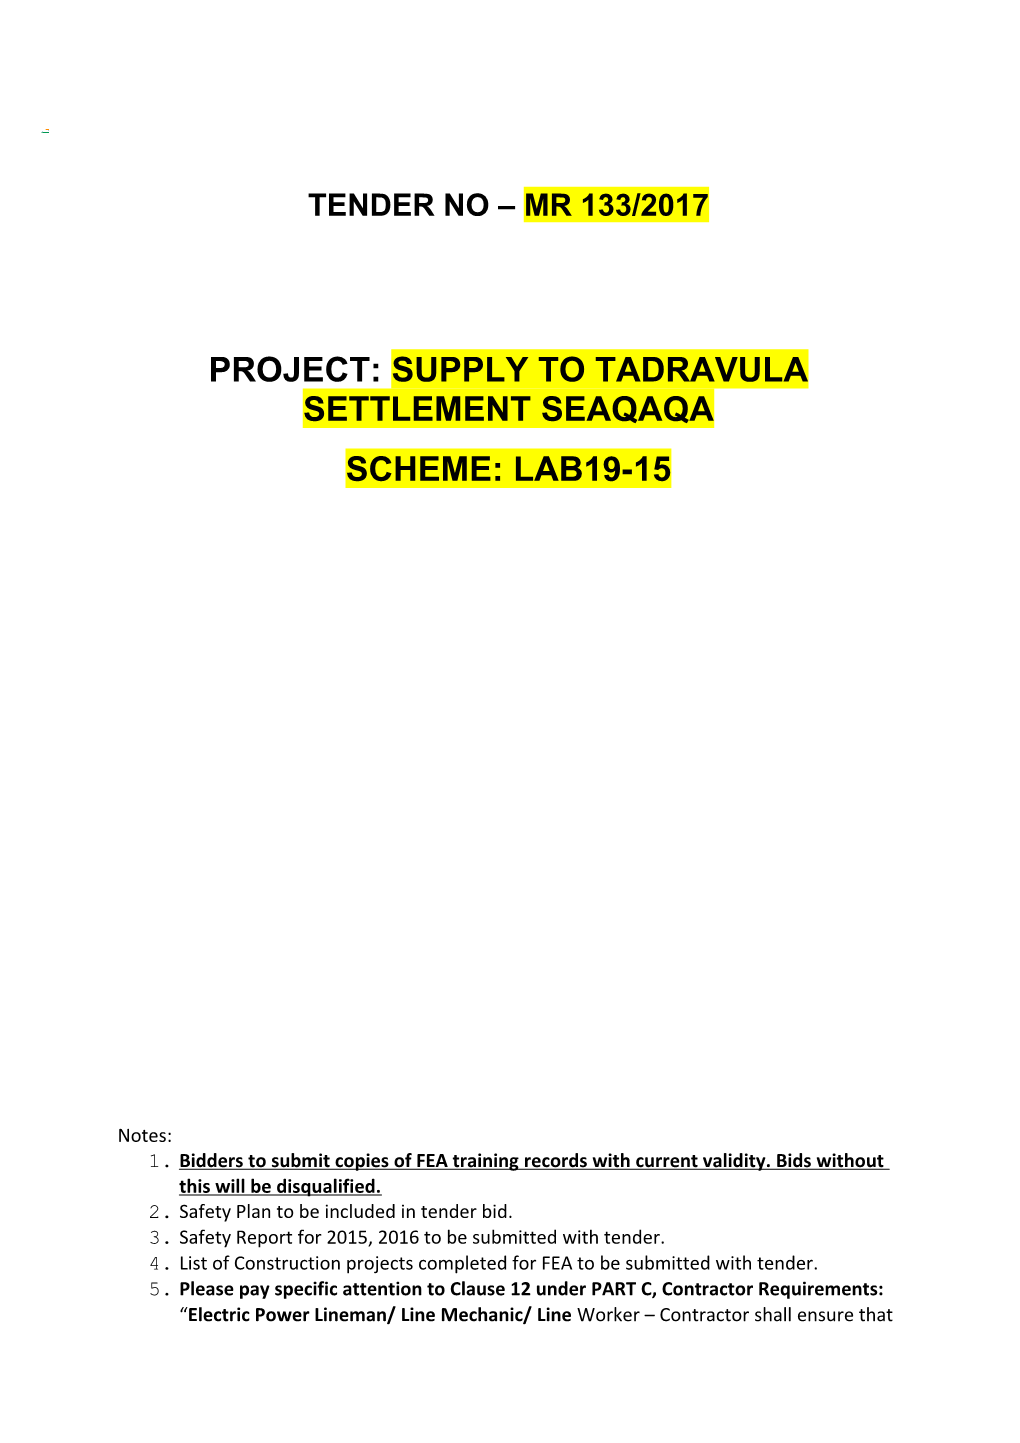 PROJECT:Supply to Tadravula Settlement Seaqaqa